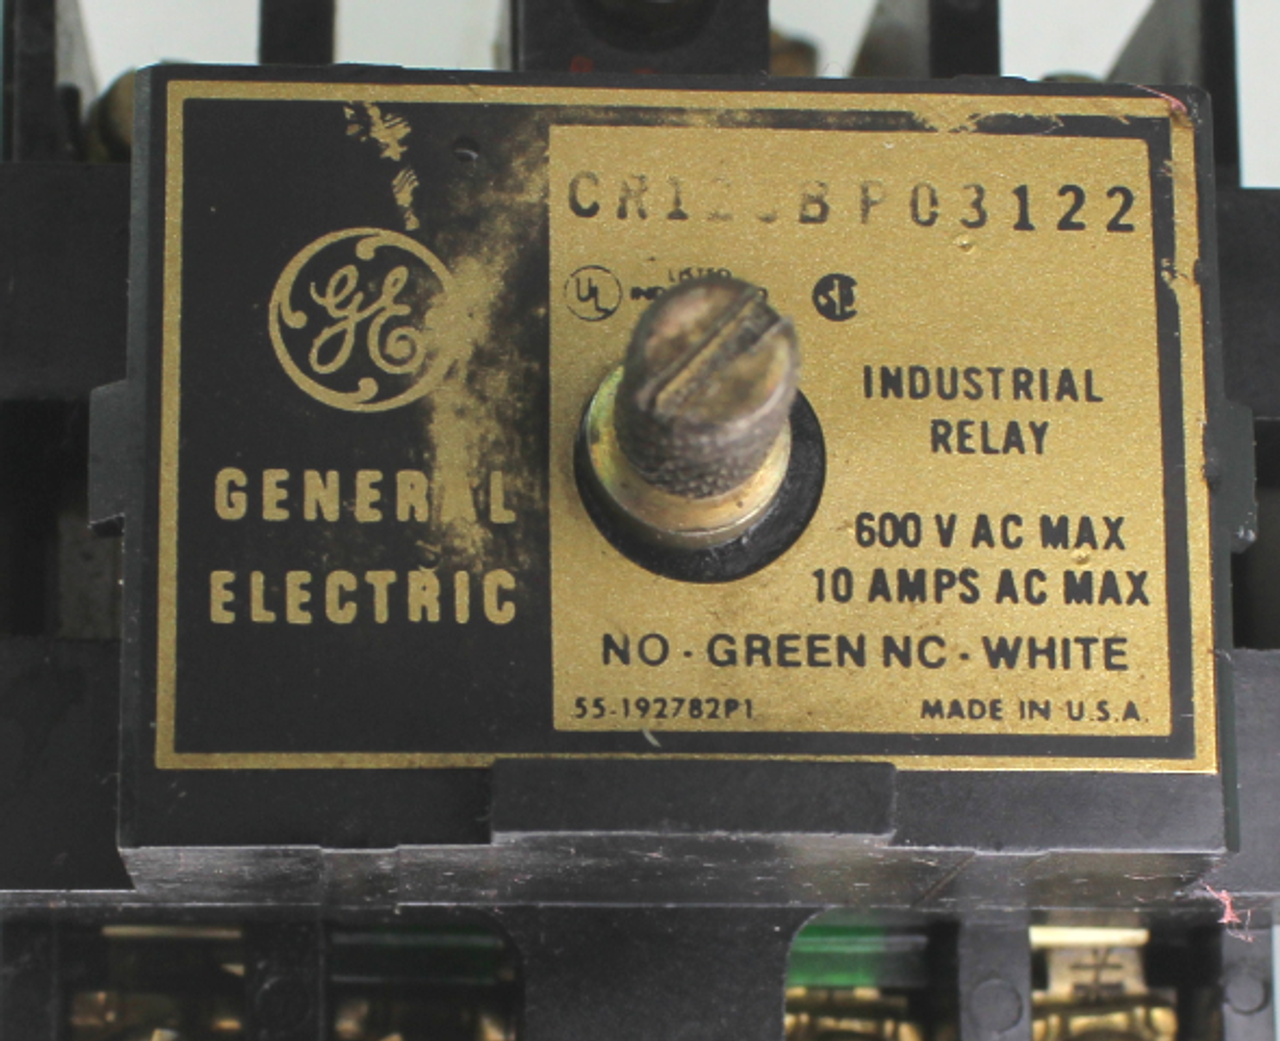 General Electric CR120BP03122 Industrial Relay 600VAC 10A